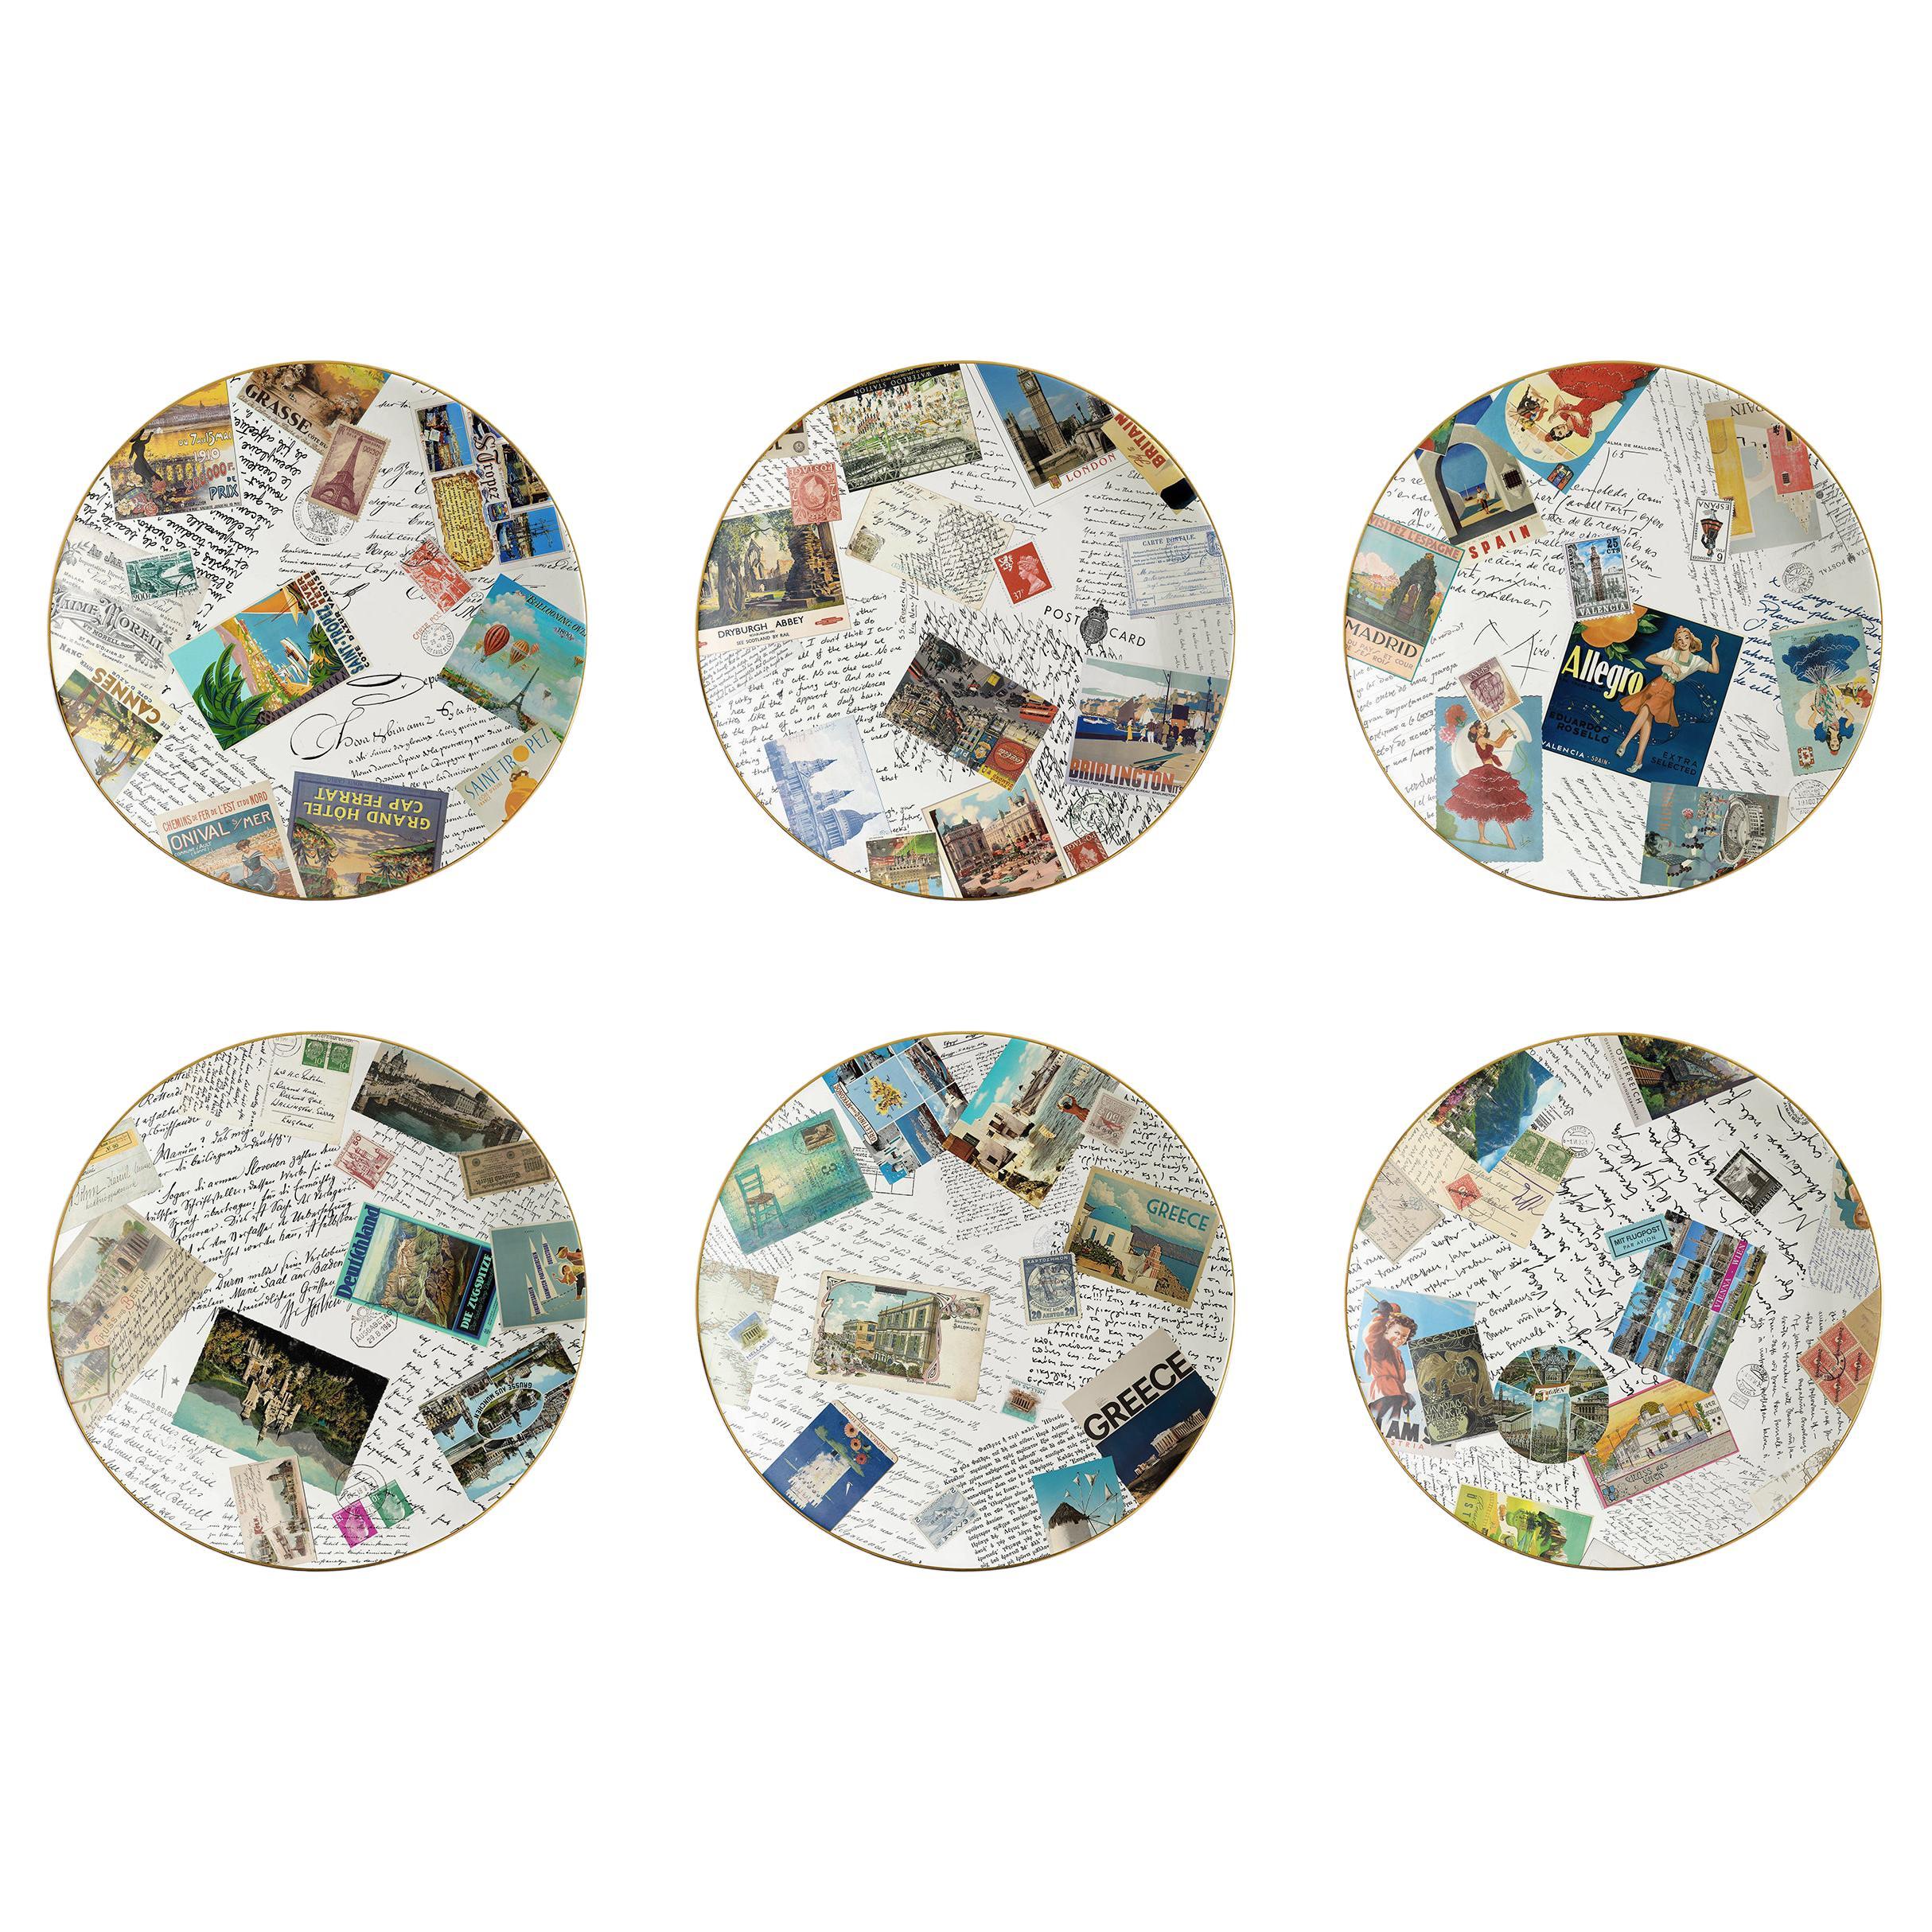 Corrispondenze, Six Contemporary Decorated Porcelain Dinner Plates